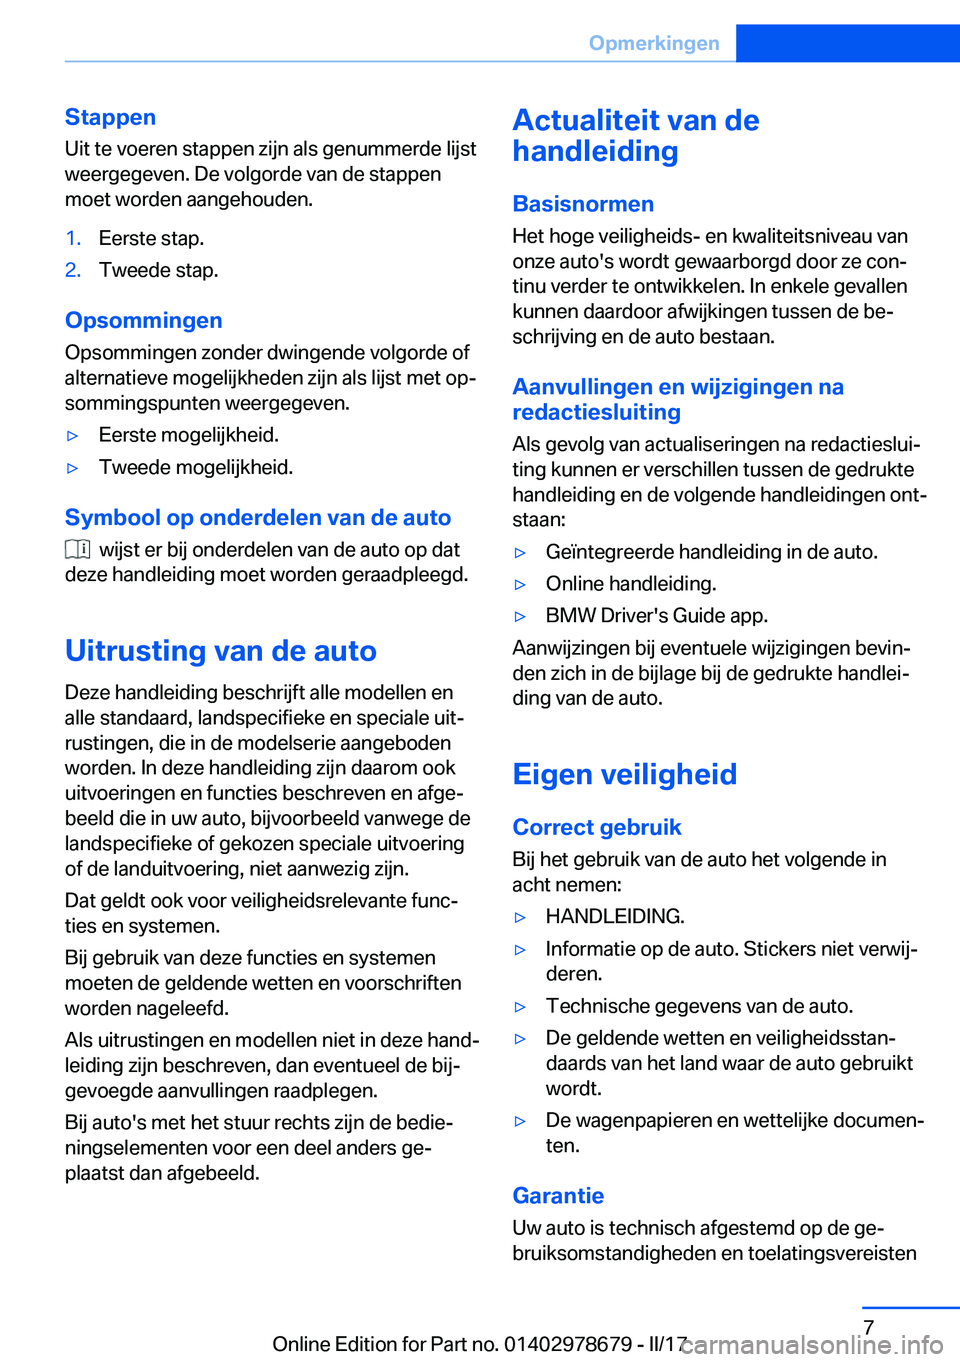 BMW 5 SERIES 2017  Instructieboekjes (in Dutch) �S�t�a�p�p�e�n
�U�i�t� �t�e� �v�o�e�r�e�n� �s�t�a�p�p�e�n� �z�i�j�n� �a�l�s� �g�e�n�u�m�m�e�r�d�e� �l�i�j�s�t �w�e�e�r�g�e�g�e�v�e�n�.� �D�e� �v�o�l�g�o�r�d�e� �v�a�n� �d�e� �s�t�a�p�p�e�n�m�o�e�t� �w